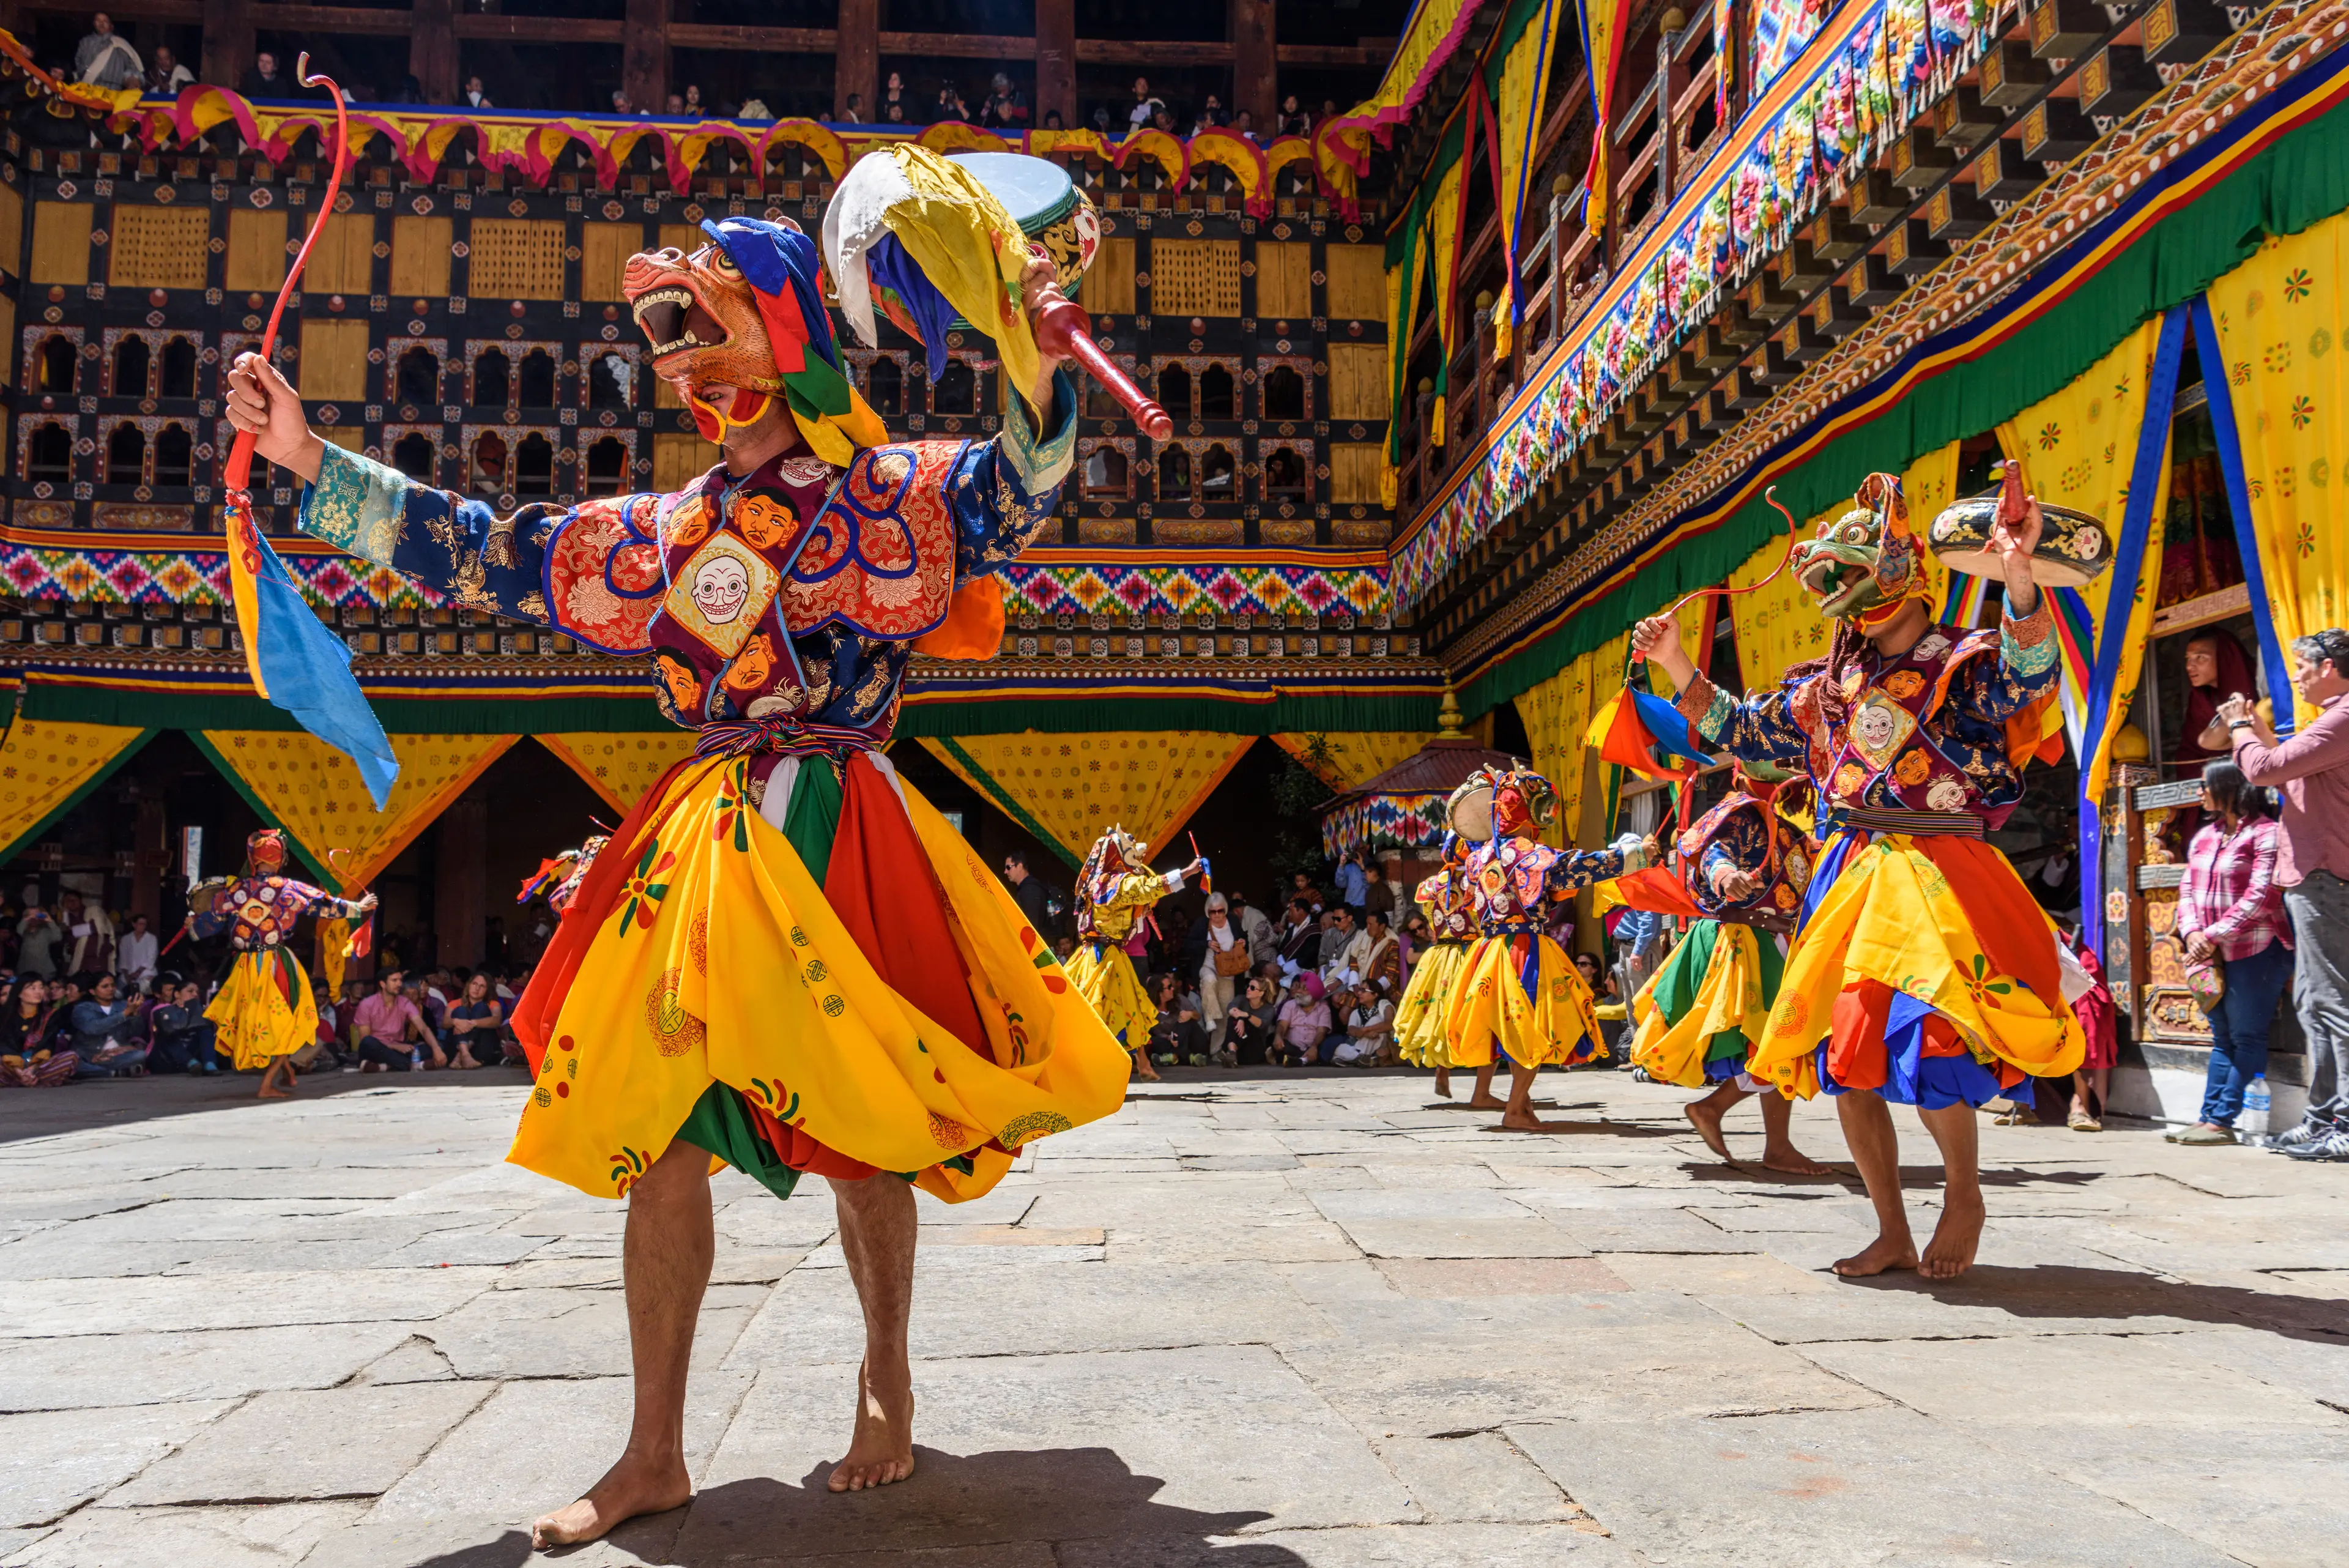 Buddhist monk dancing wearing a colorful mask at the Paro Tsechu festival 